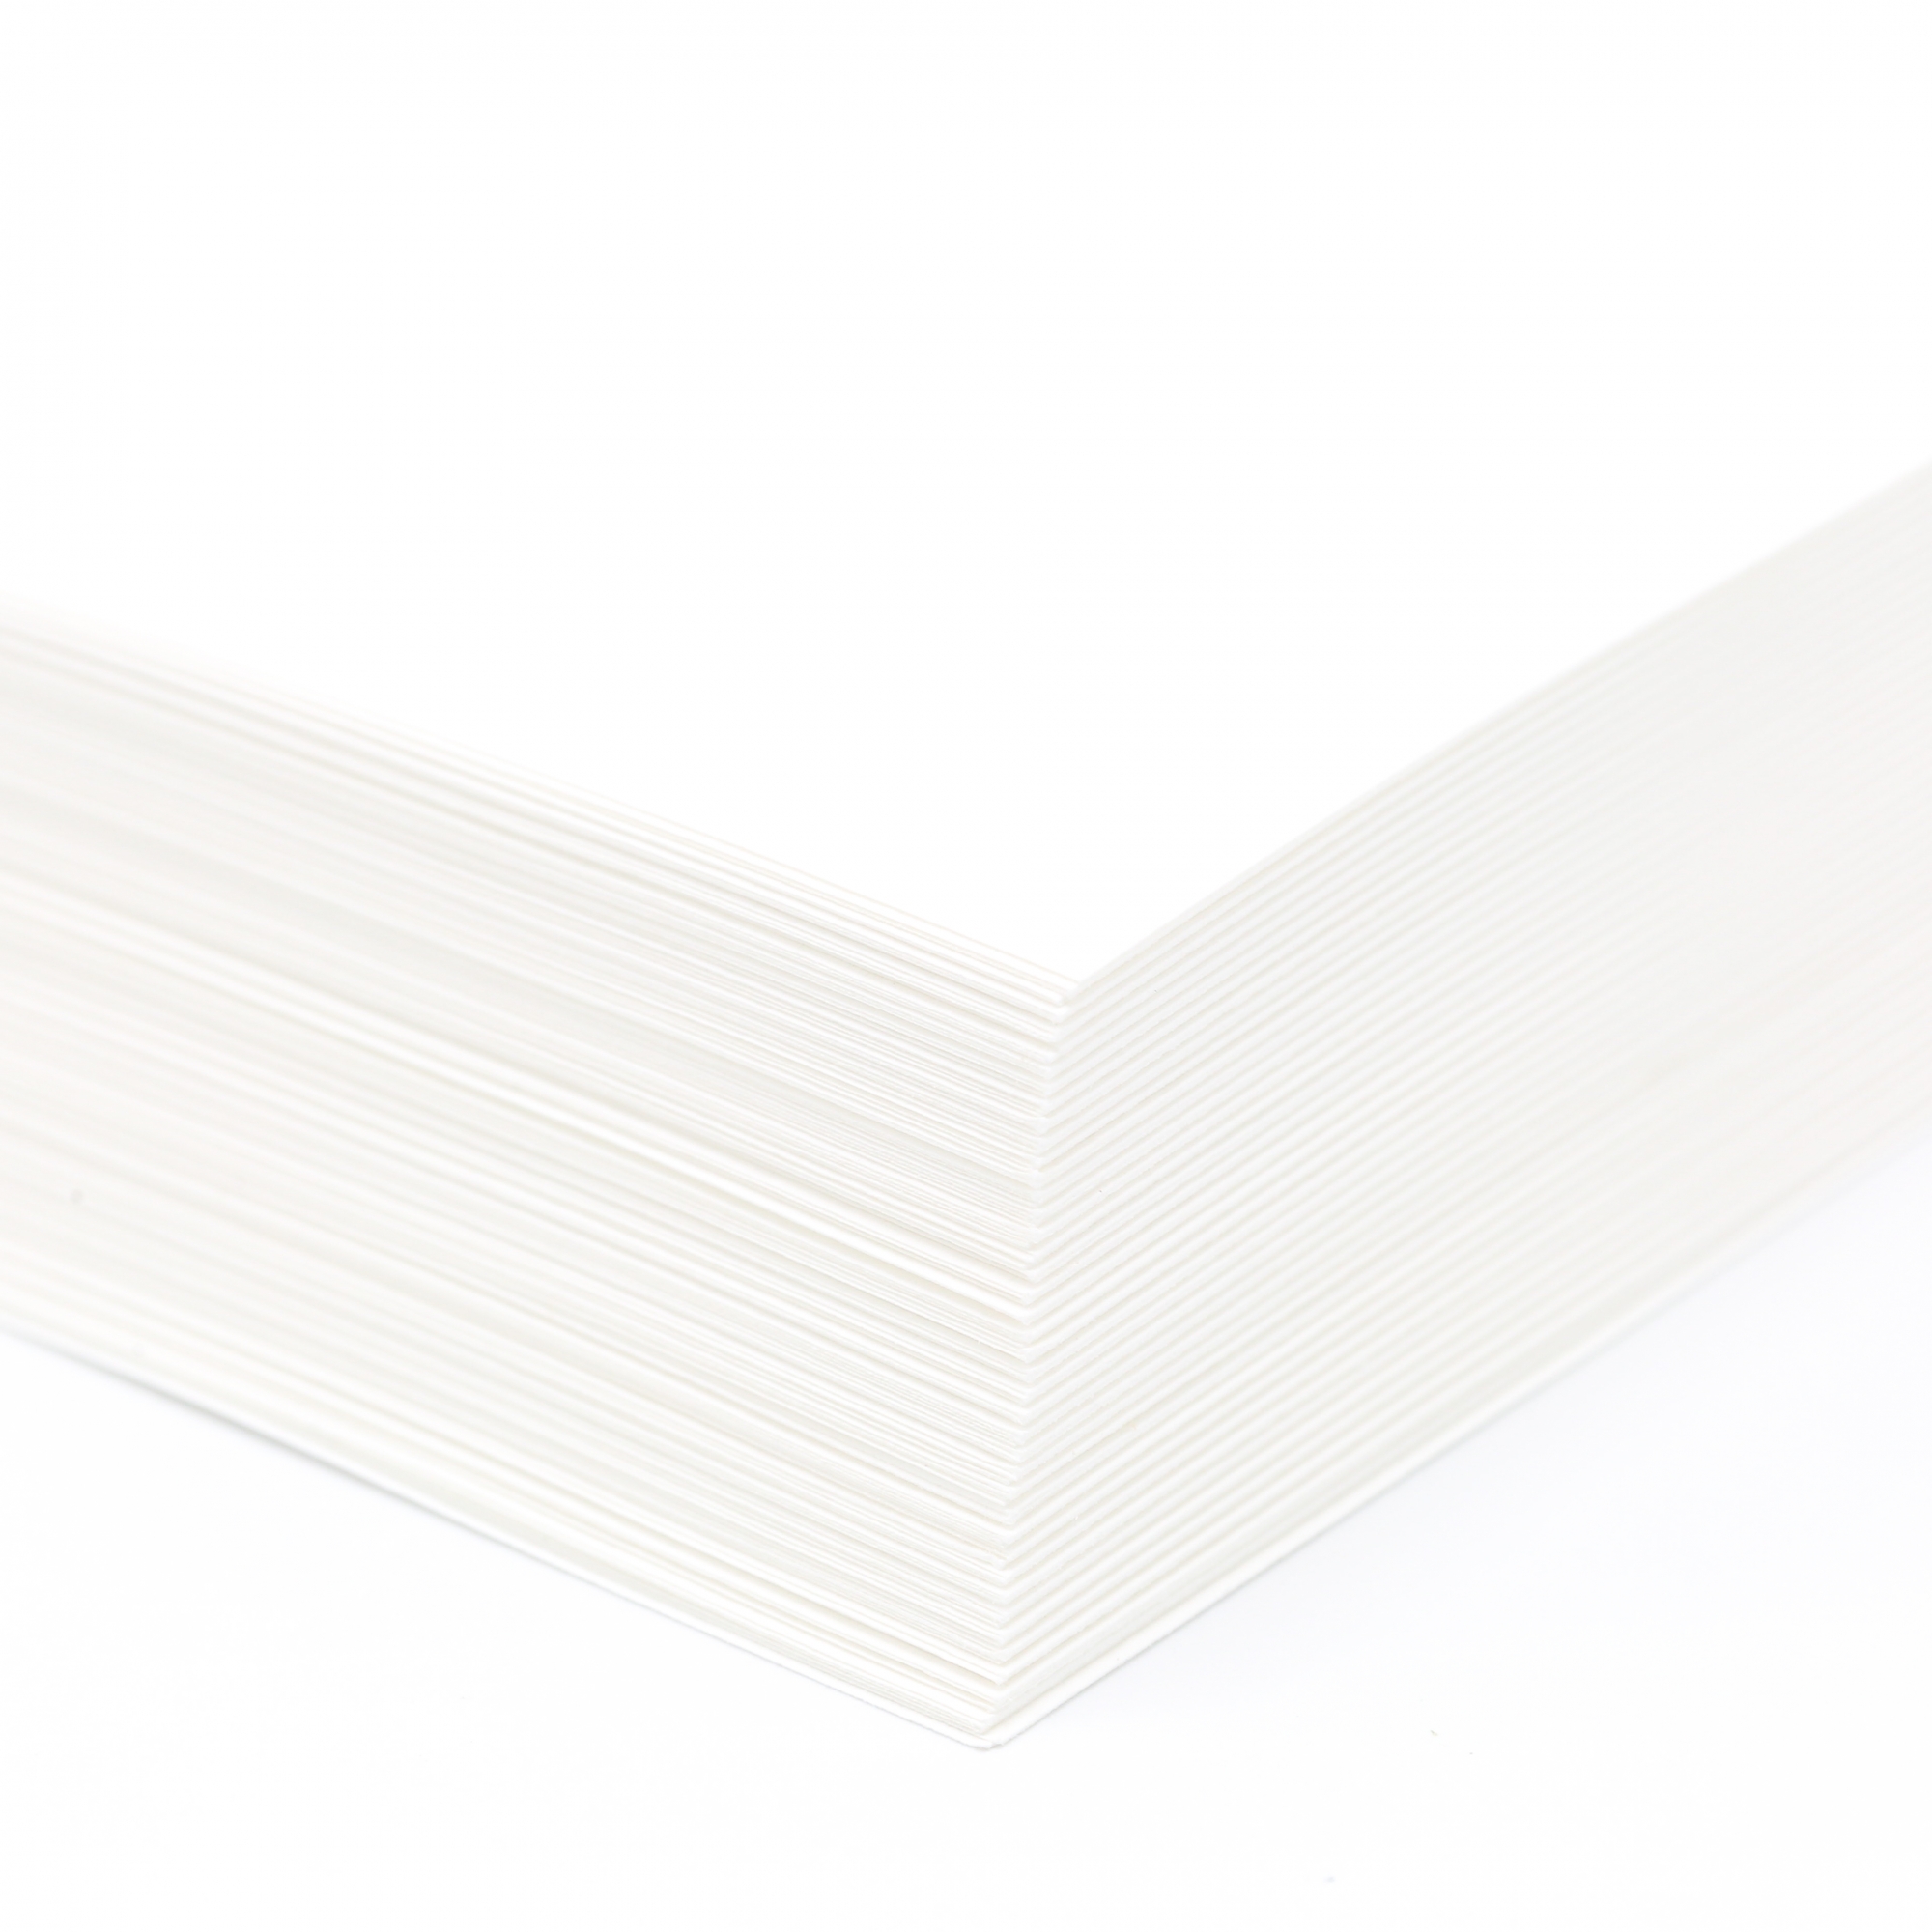 Lettermark Index Cover White 11x17 90lb 250/pkg, Paper, Envelopes,  Cardstock & Wide format, Quick shipping nationwide